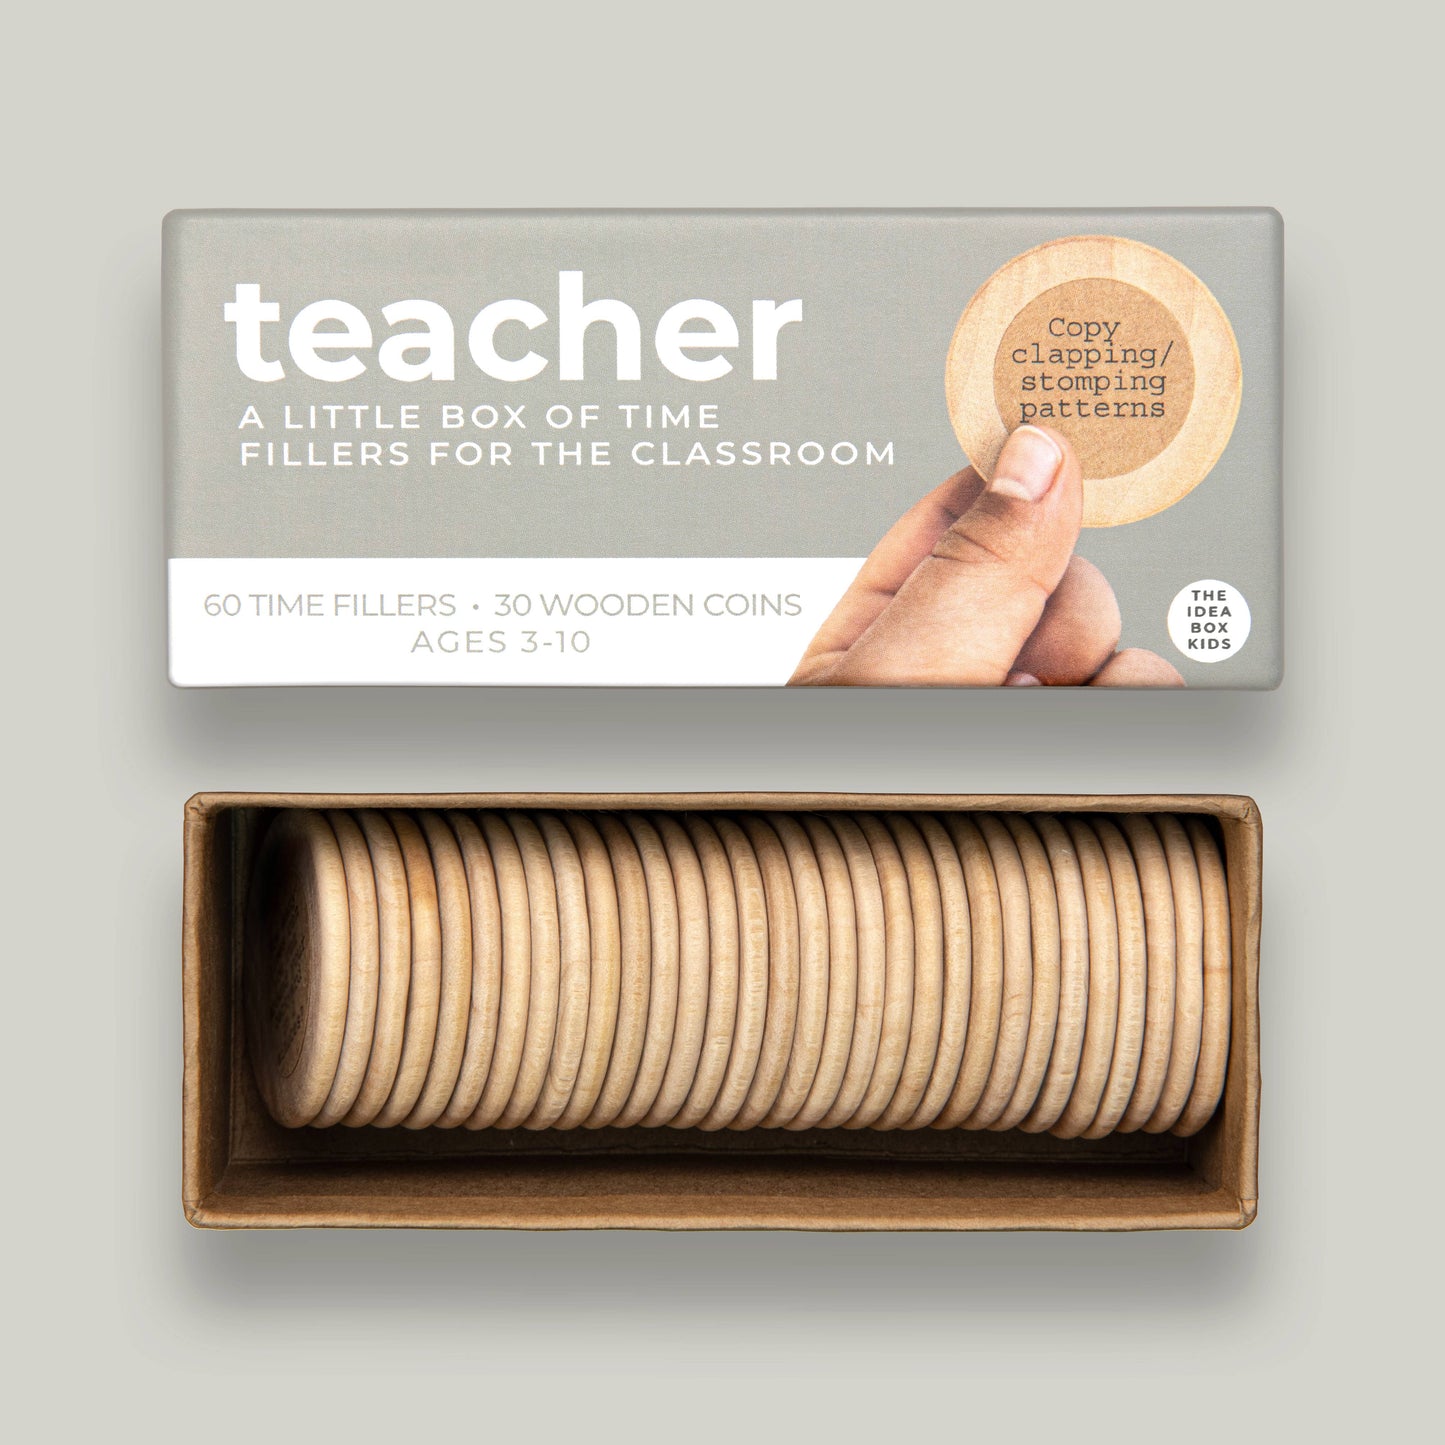 Idea Box - Time Fillers for Teachers